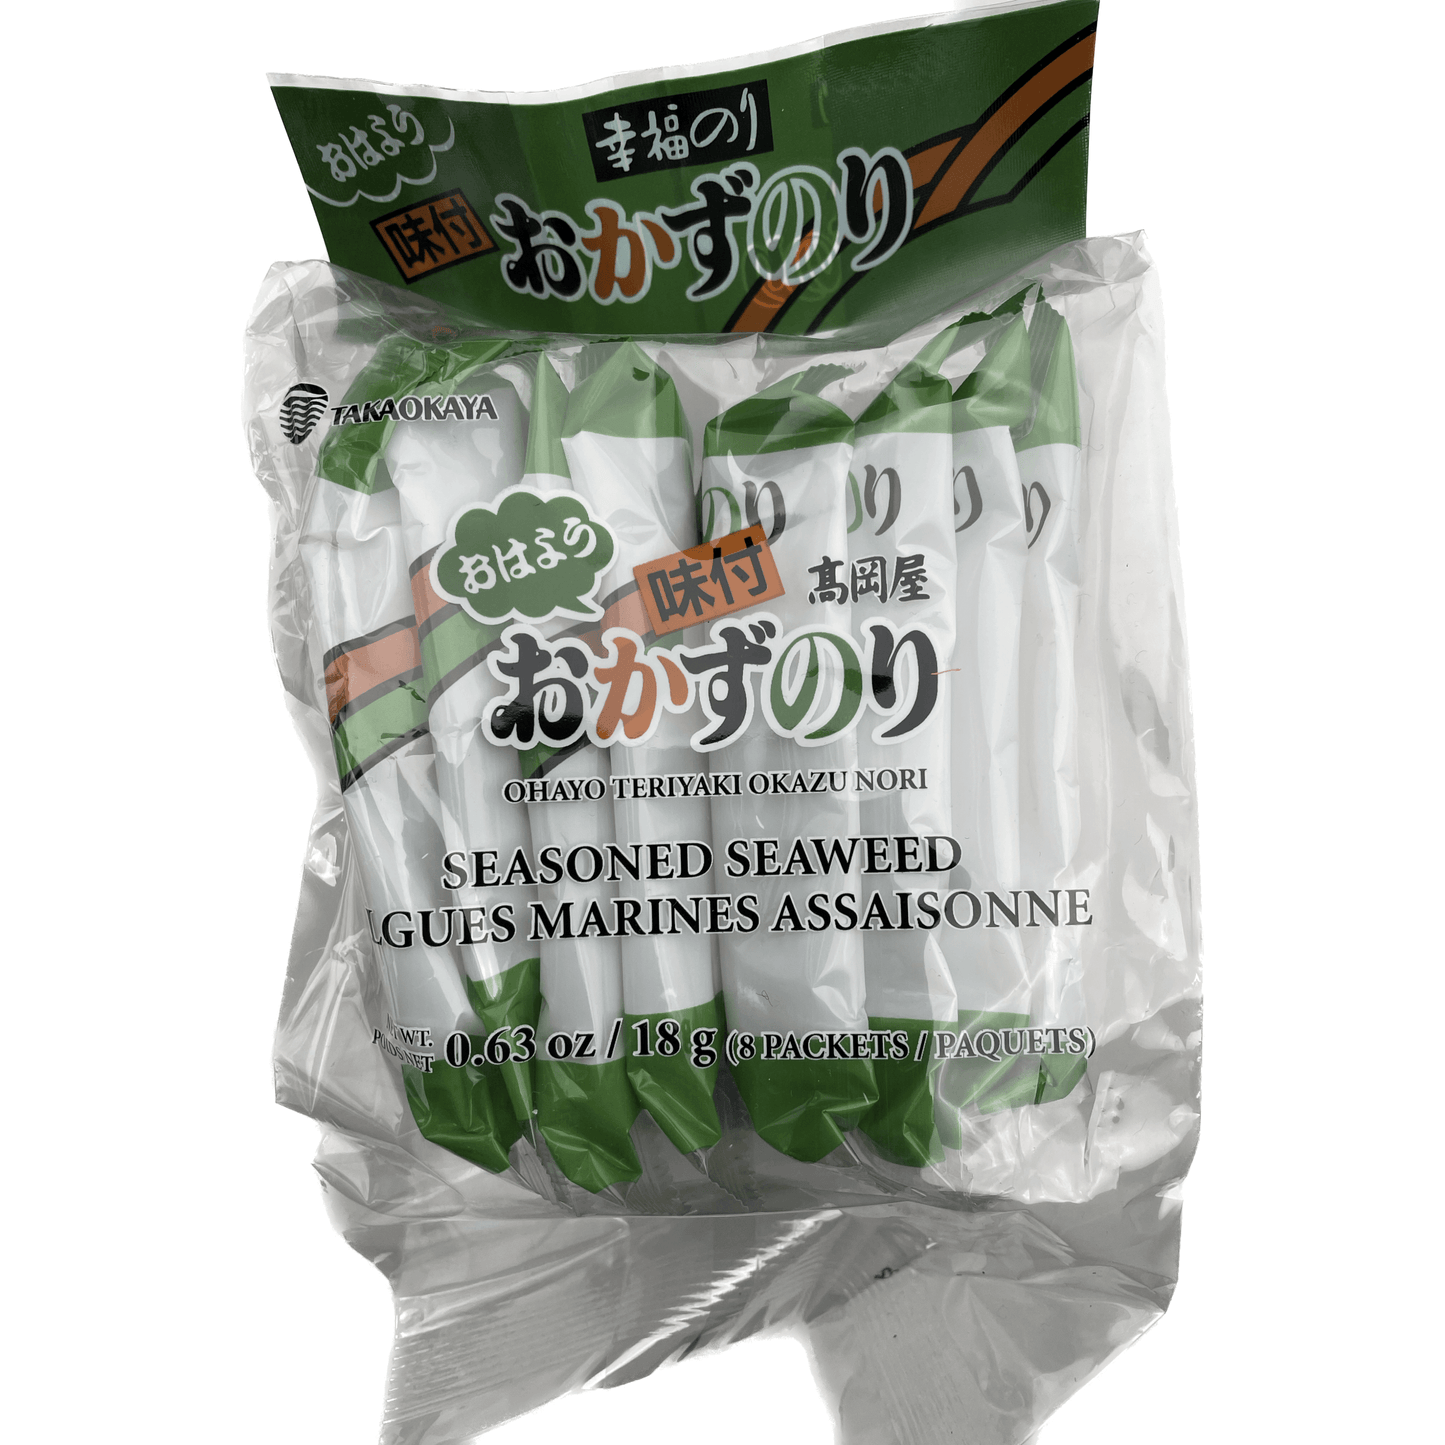 Takaokaya Okazu Nori Seaoned Seaweed 8pcs / 高岡屋 おはようおかずのり 味付けのり 8袋入 - RiceWineShop